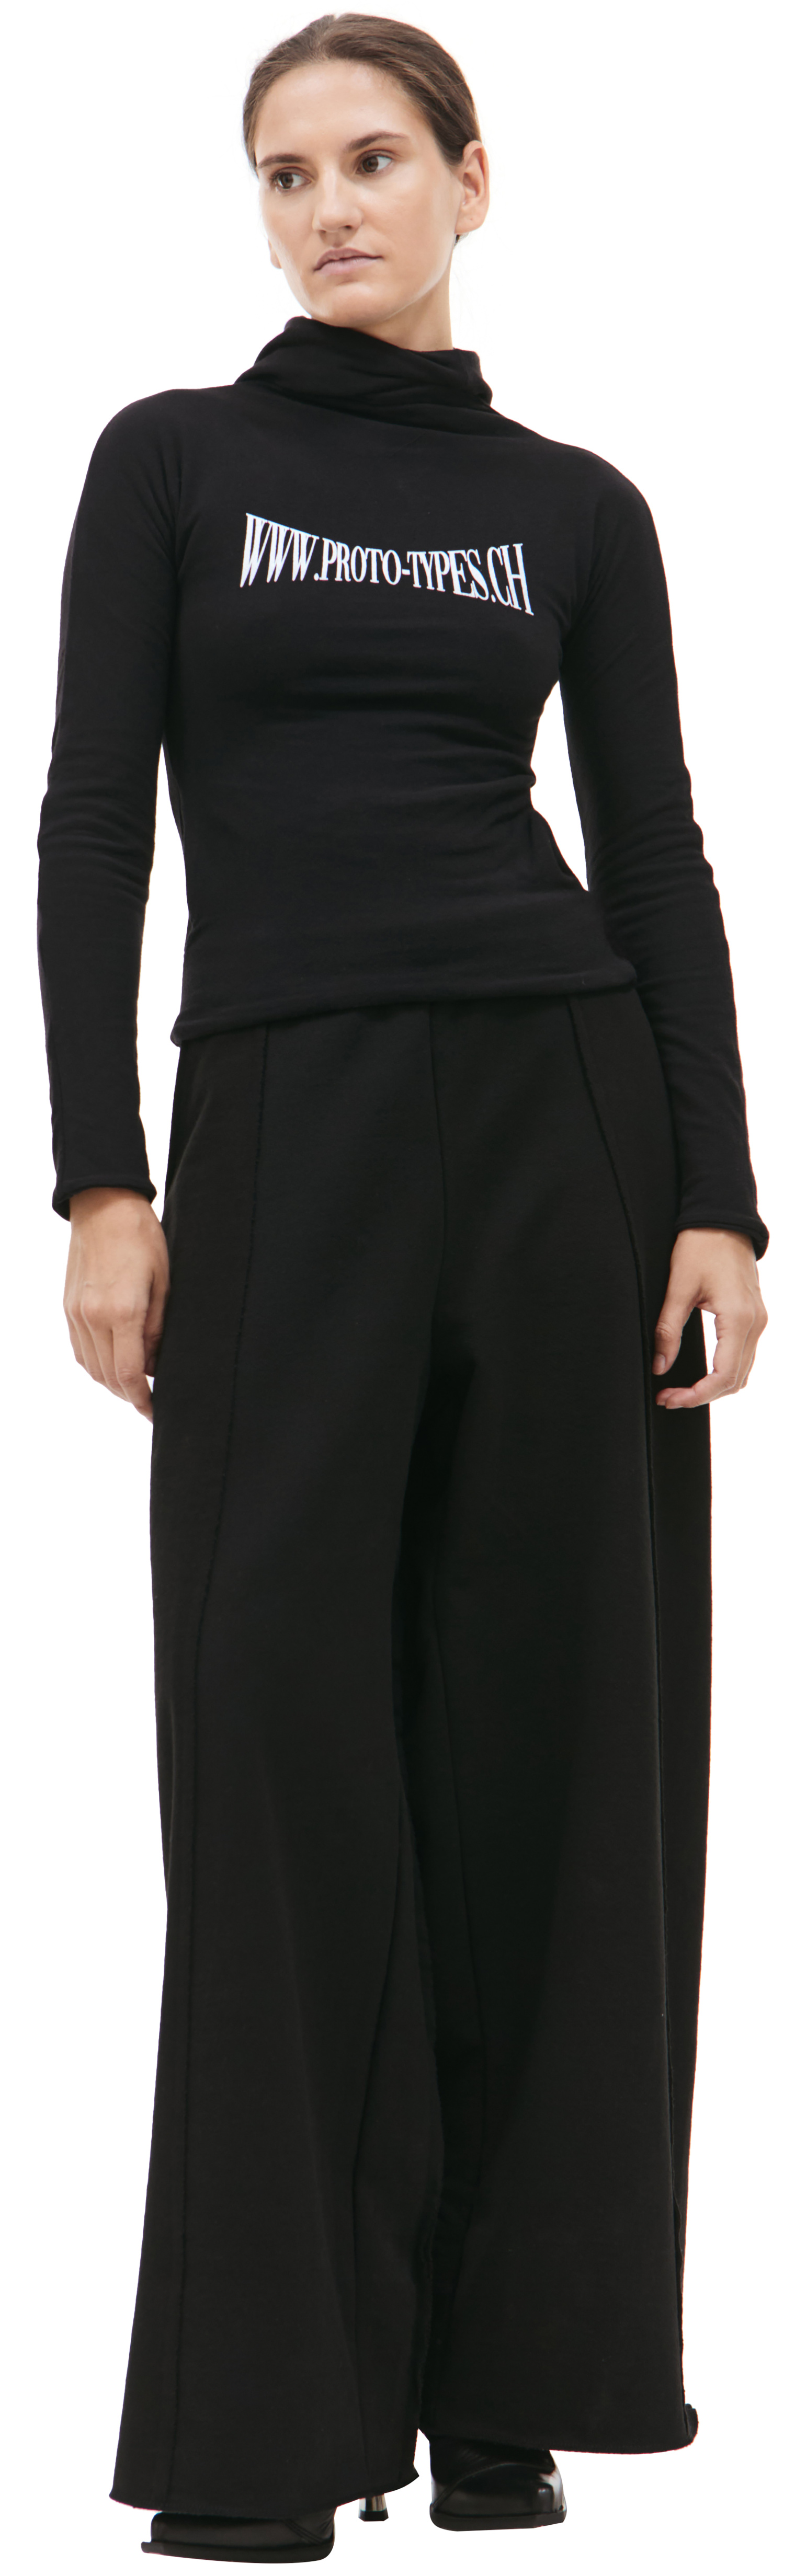 Buy PROTOTYPES women black twisted hoodie for €380 online on SV77 ...